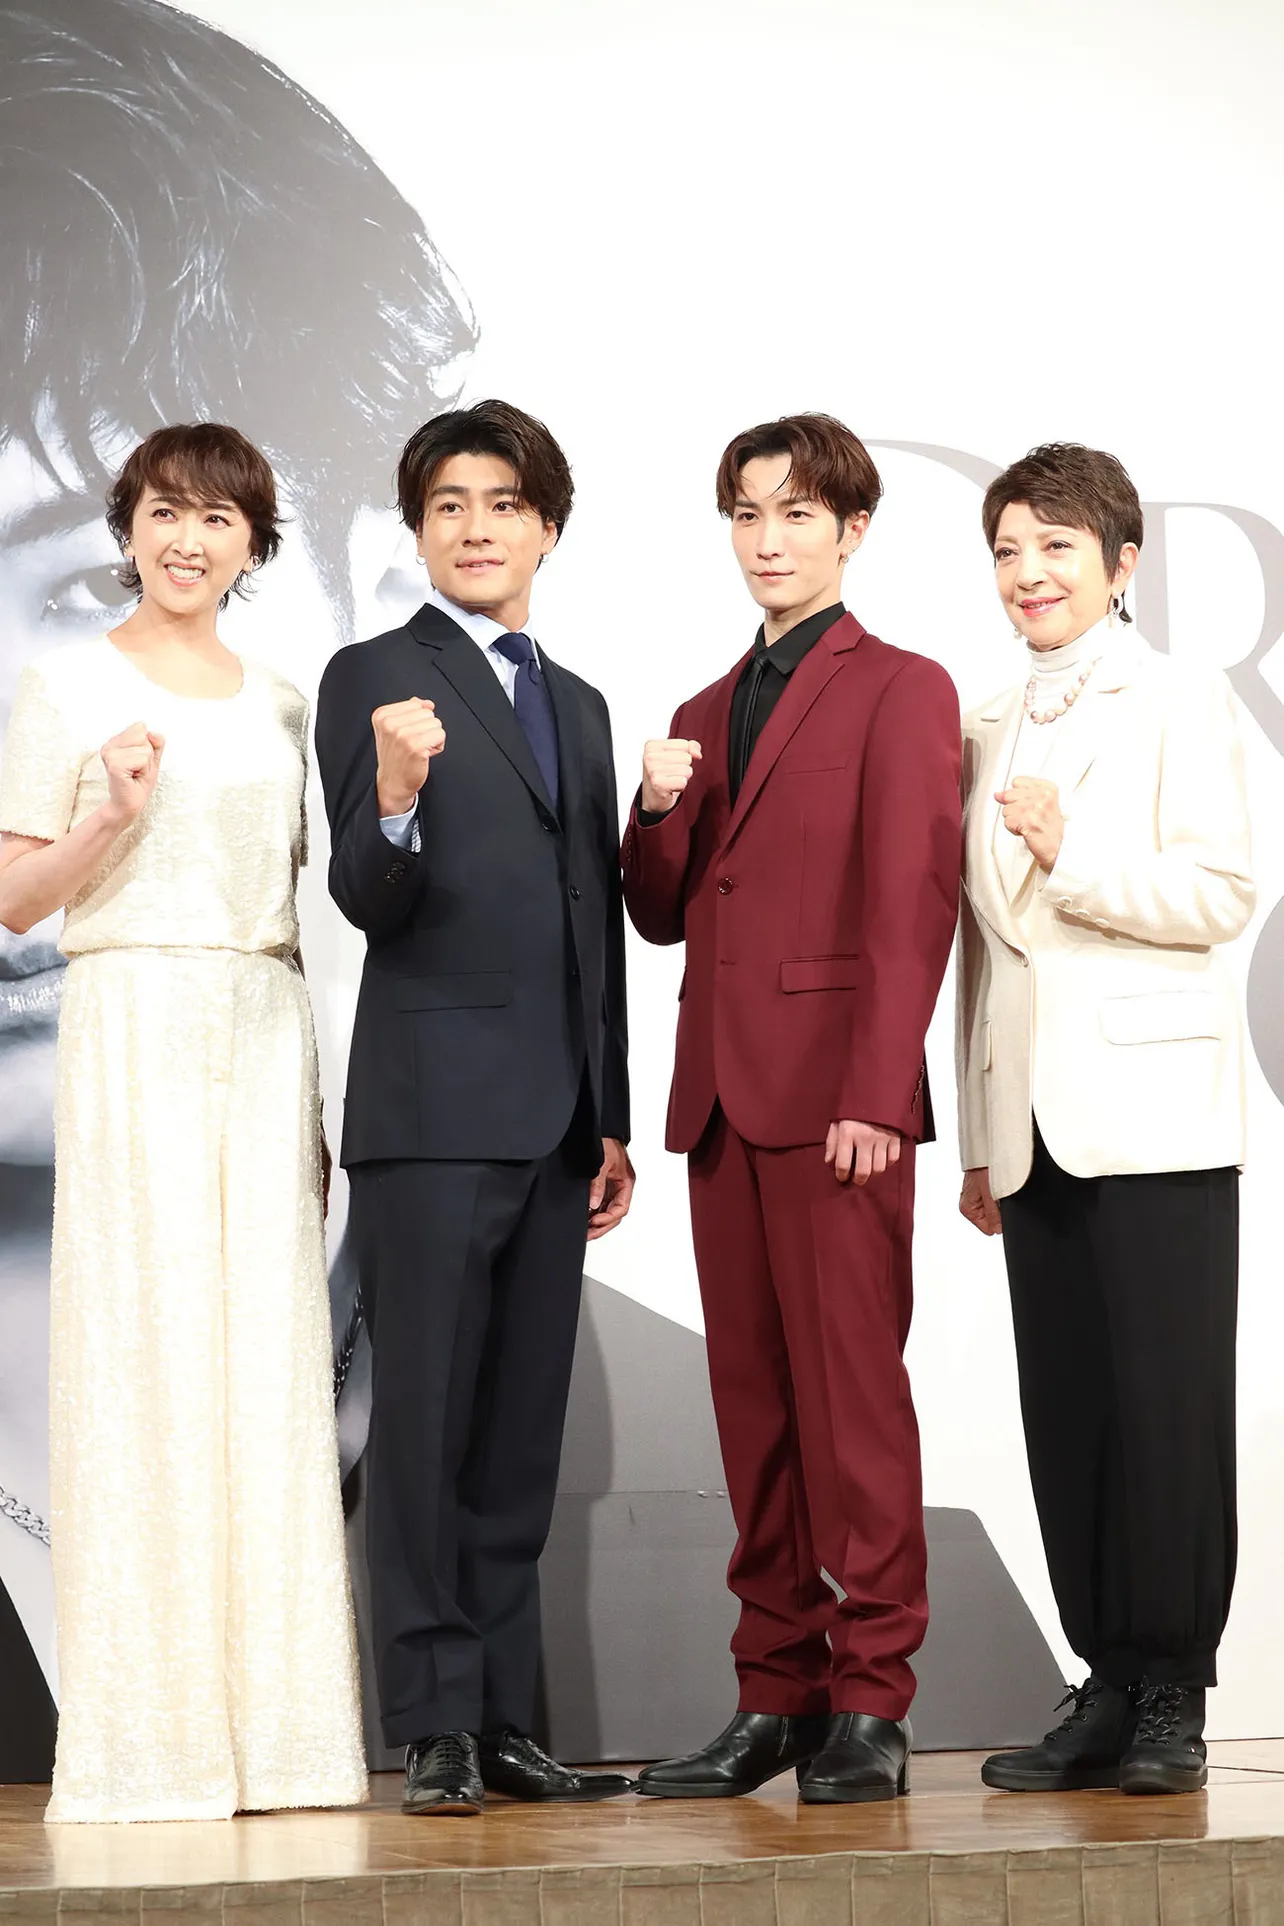 「DREAM BOYS」の制作発表会見が行われ、(左から)紫吹淳、森本慎太郎、渡辺翔太、鳳蘭が登壇した